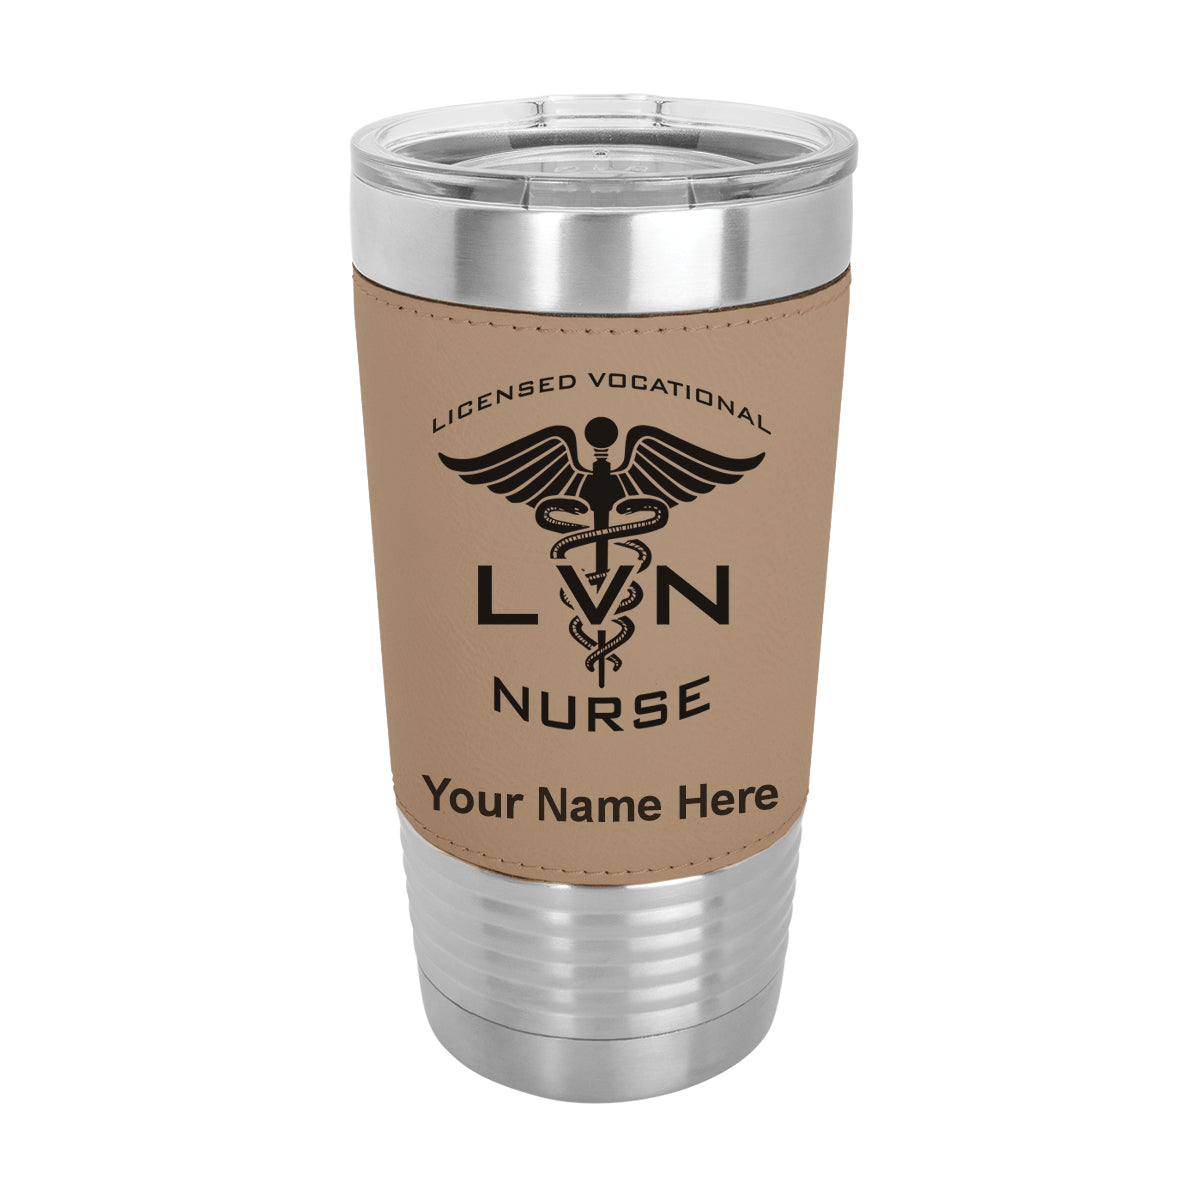 20oz Faux Leather Tumbler Mug, LVN Licensed Vocational Nurse, Personalized Engraving Included - LaserGram Custom Engraved Gifts